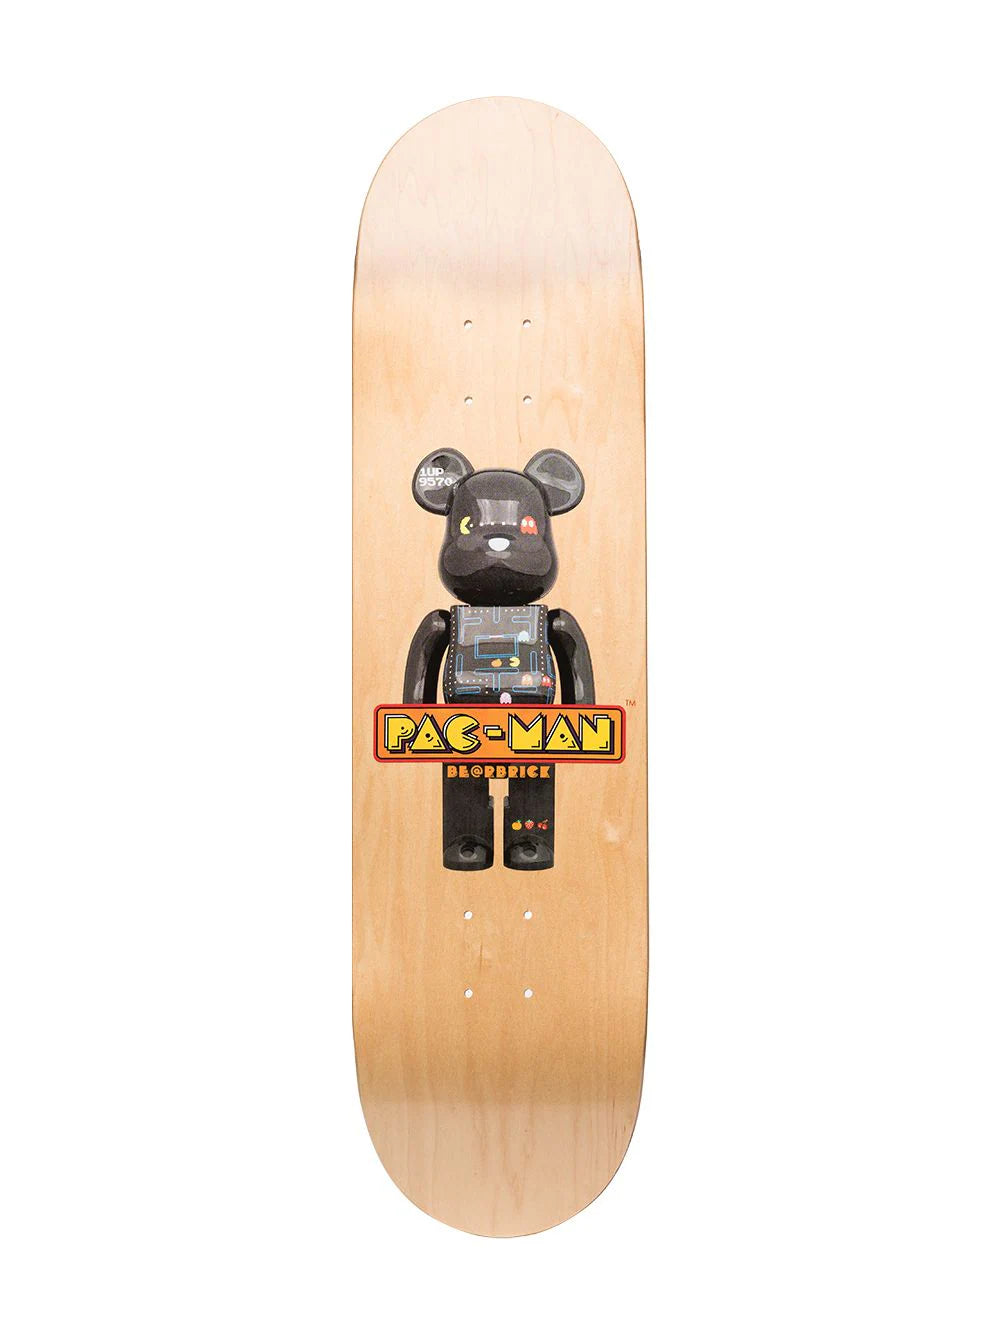 Medicom Toy x Pacman Wood Skateboard